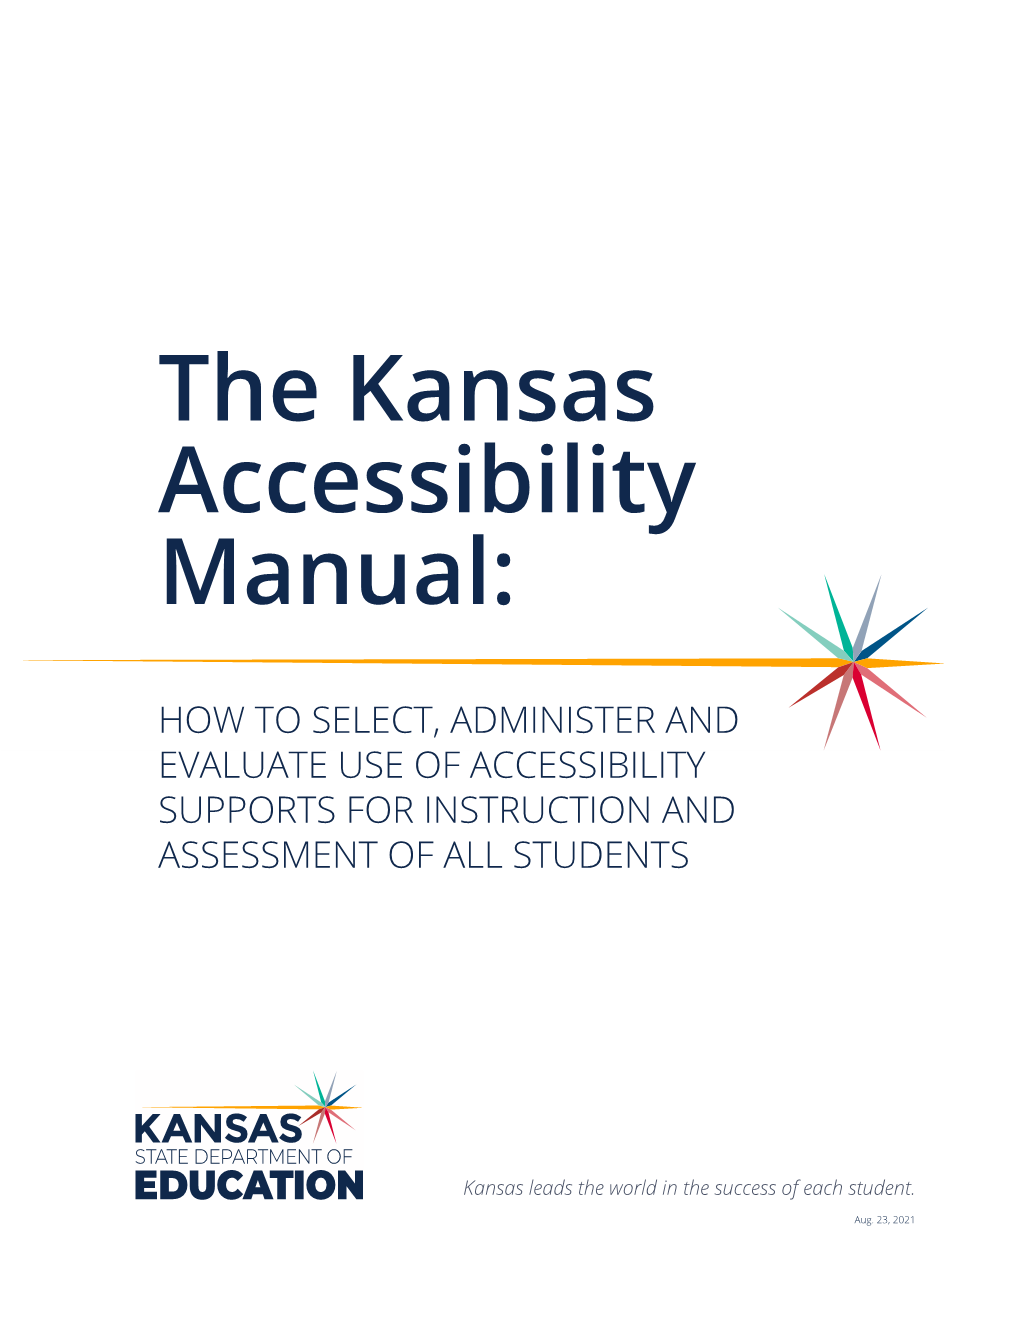 The Kansas Accessibility Manual